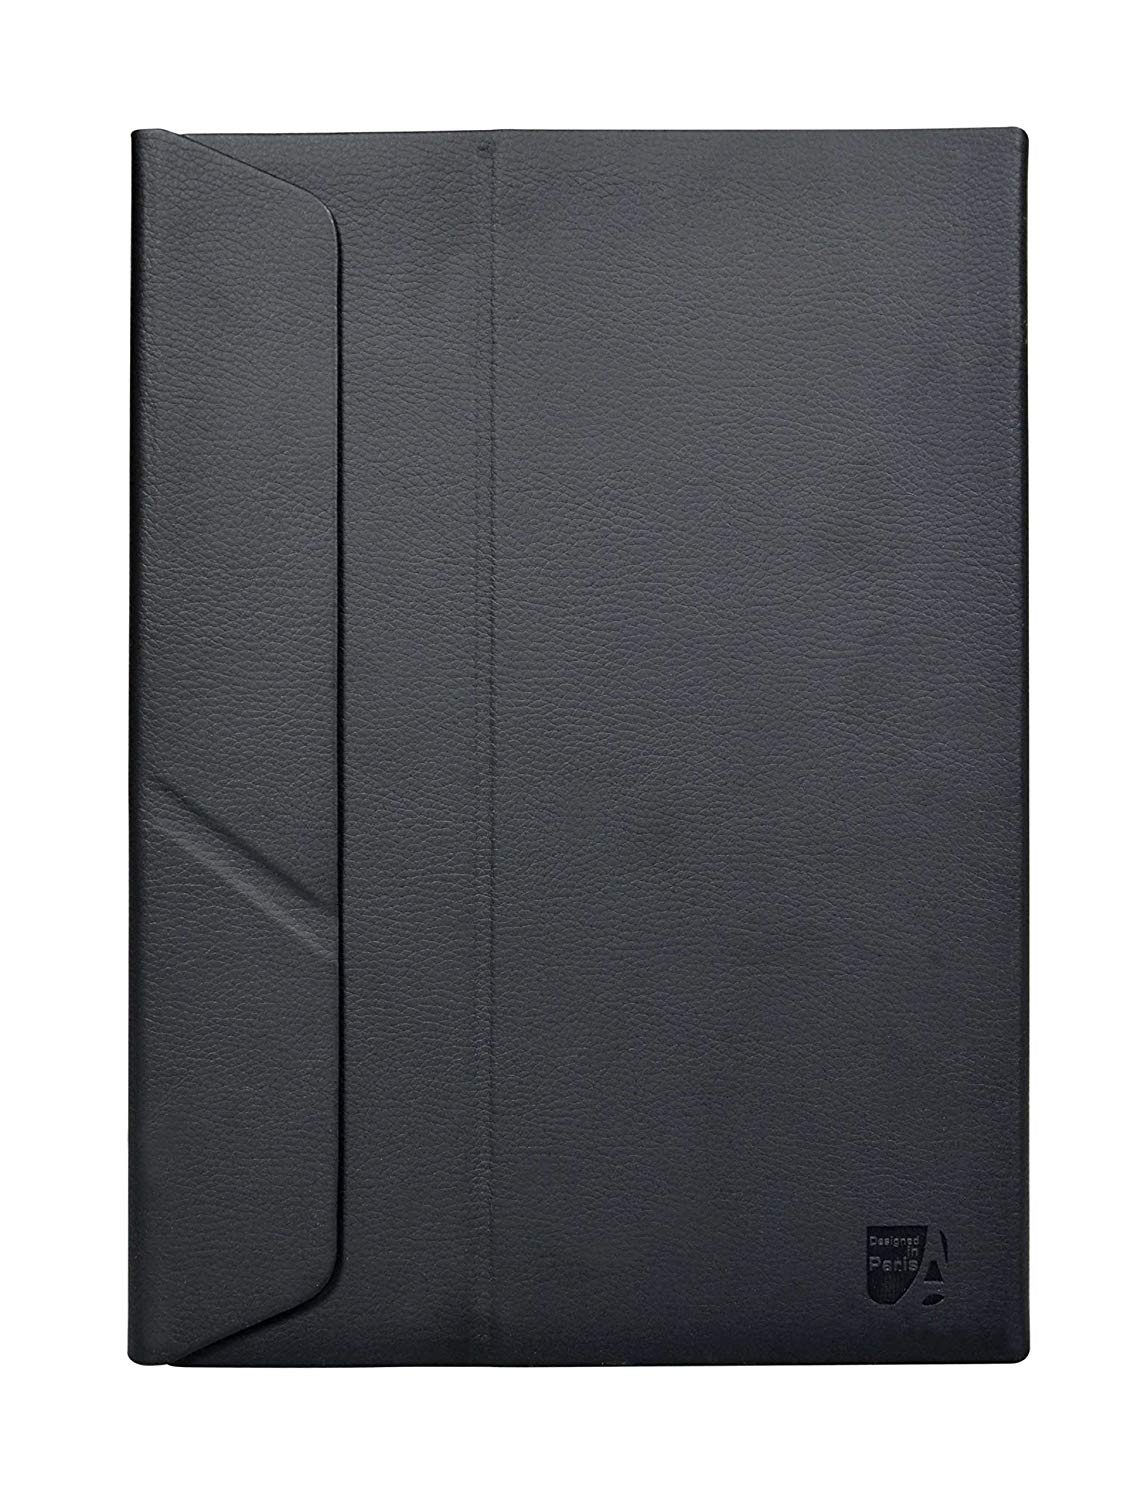 PORT Muskoka Capa Tablet iPad Pro 9.7 - Black